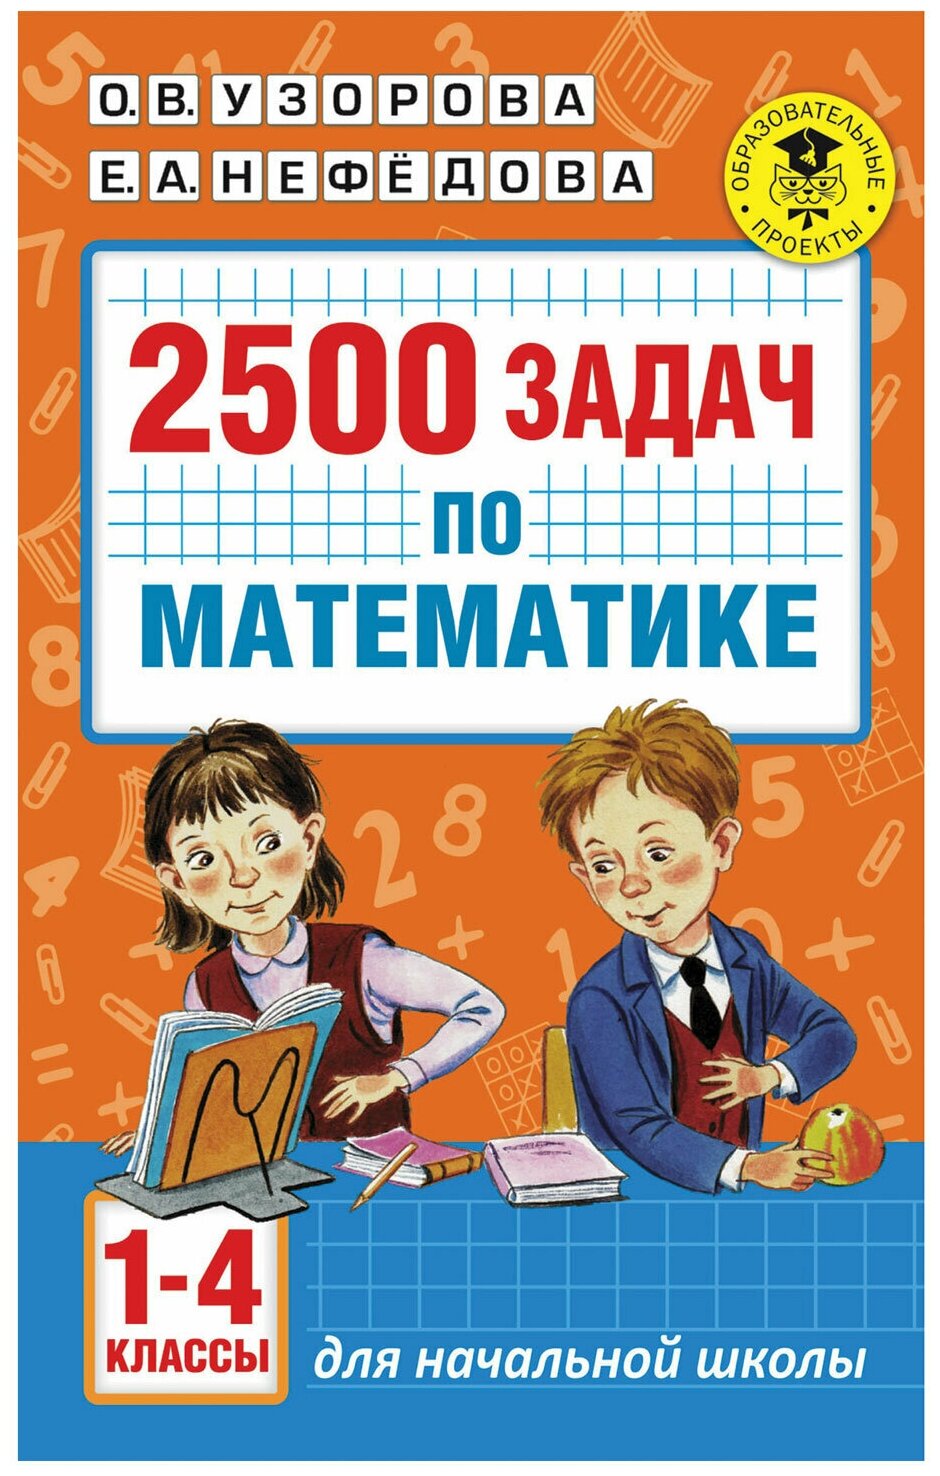 Узорова О.В Нефедова Е.А "2500 задач по математике. 1-4 классы"